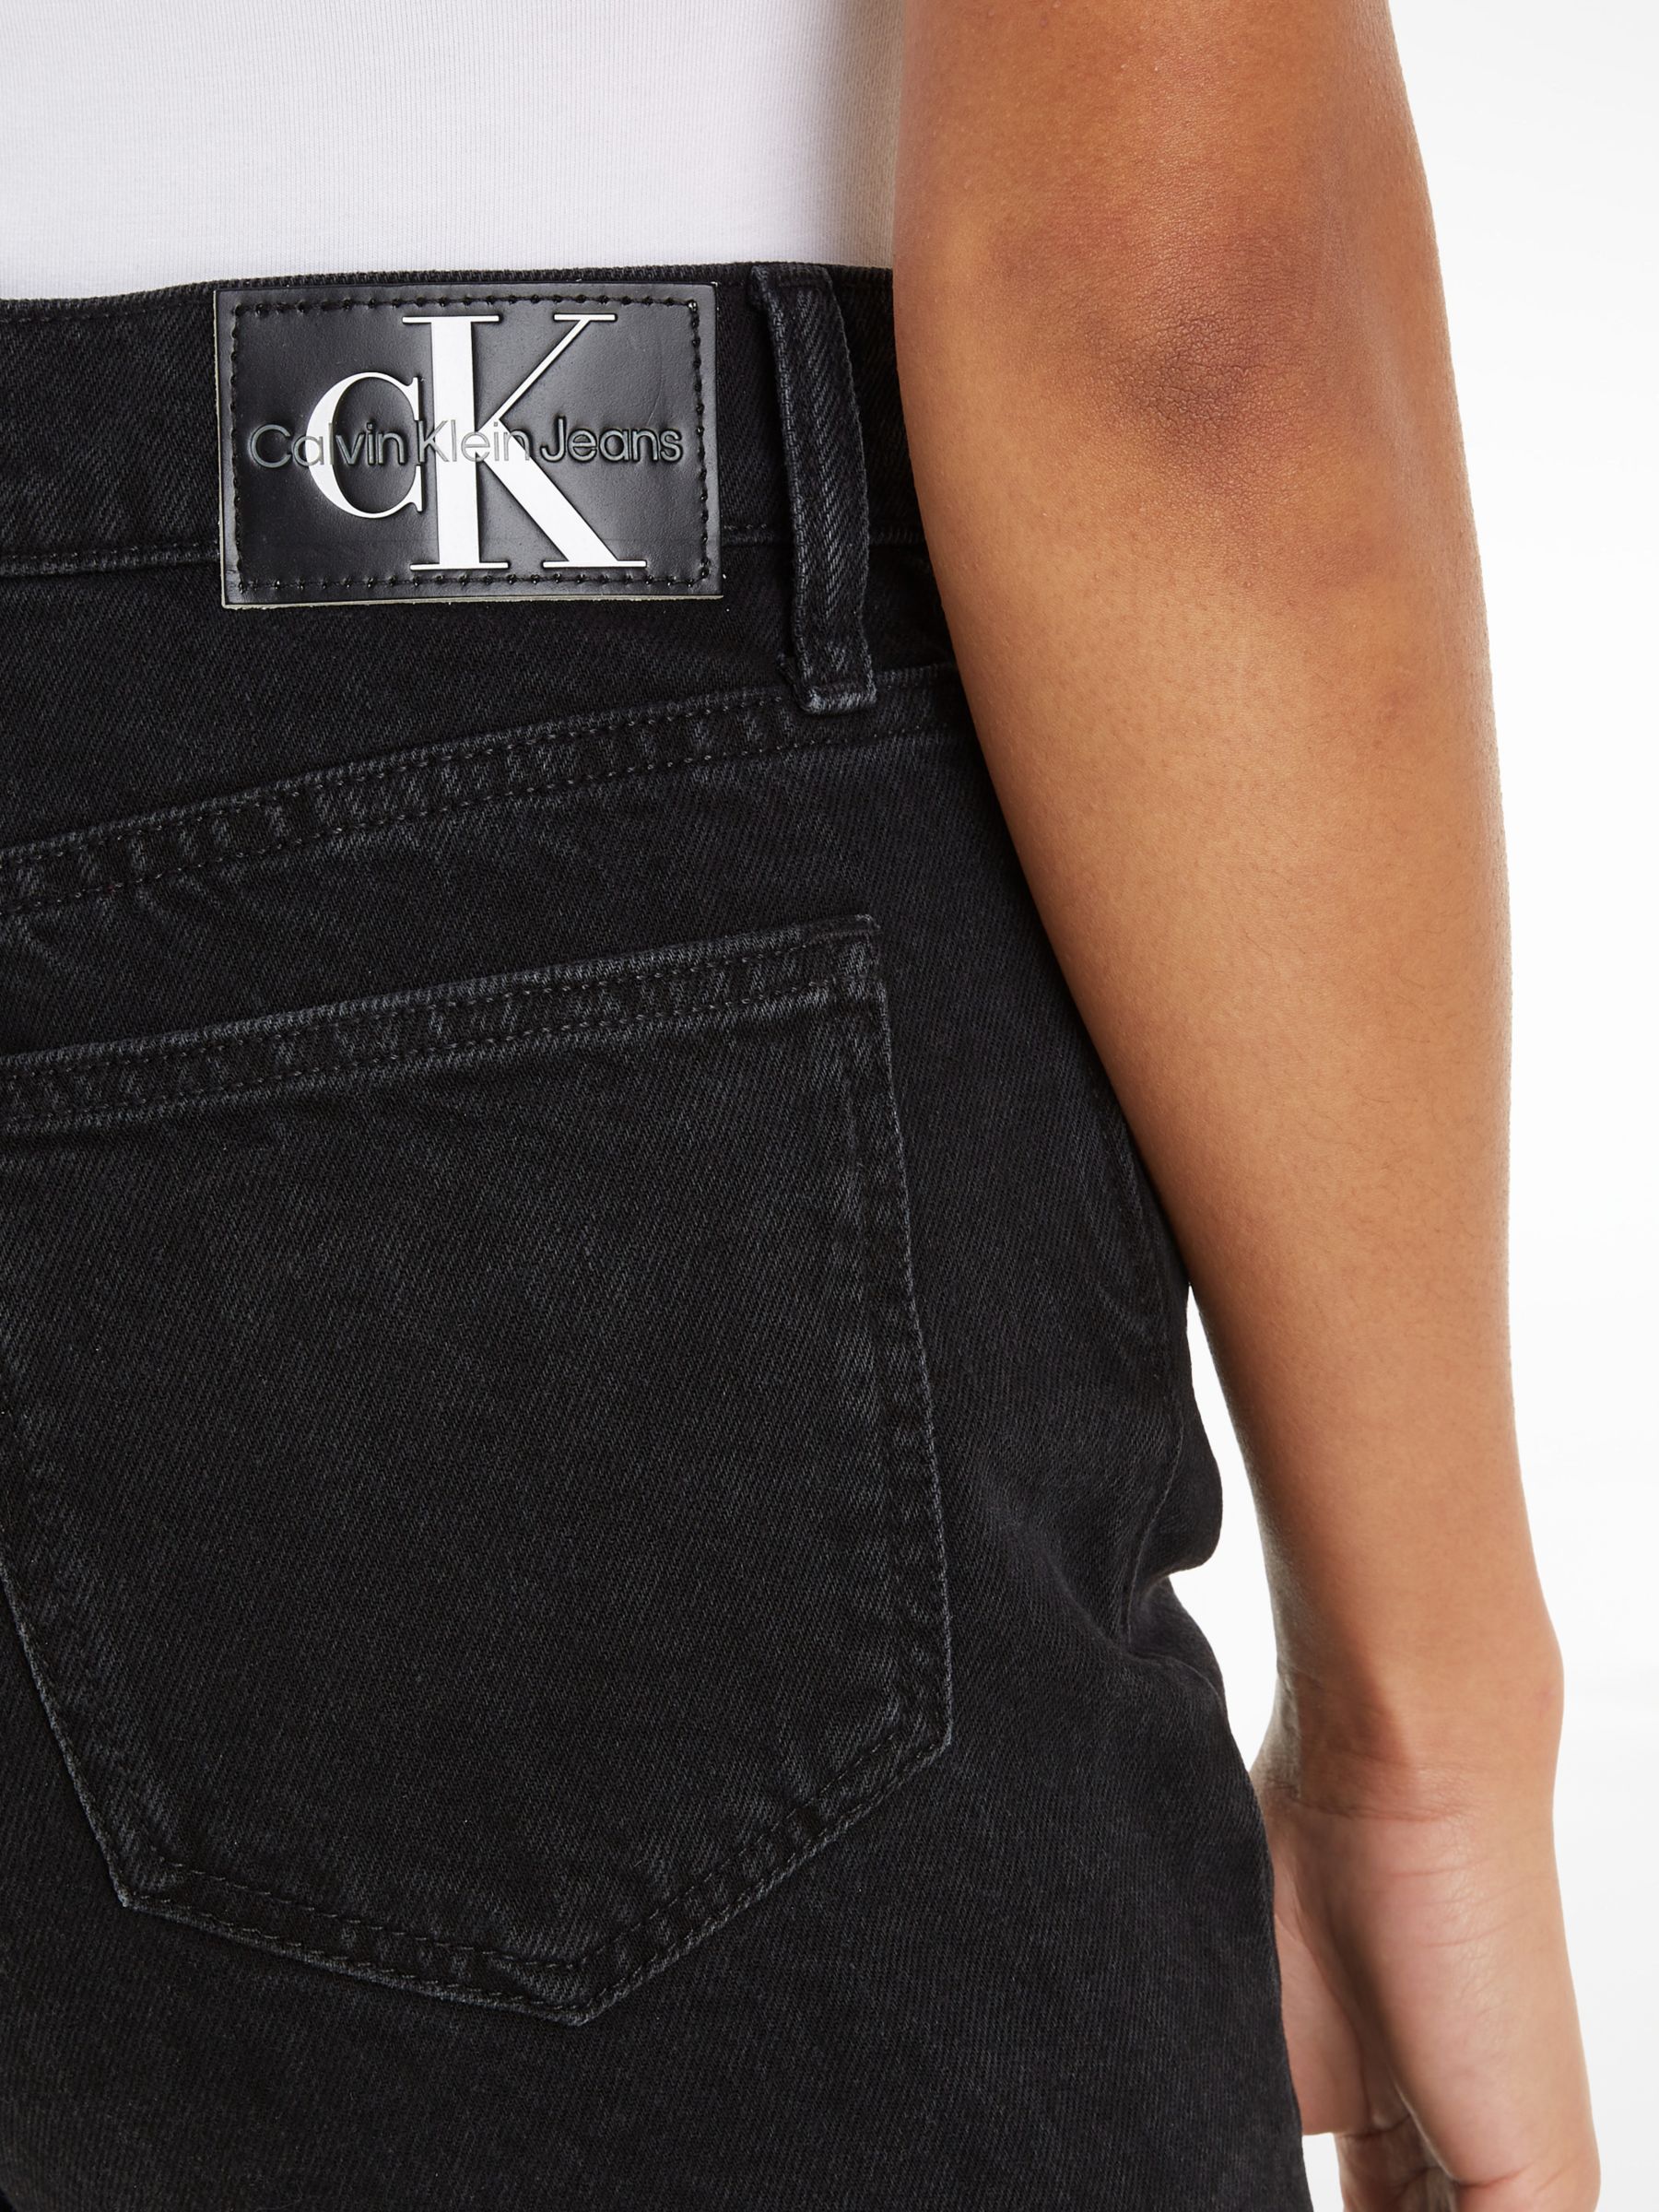 Calvin Klein Plain Slim Fit Straight Cut Jeans, Denim Black, 26R